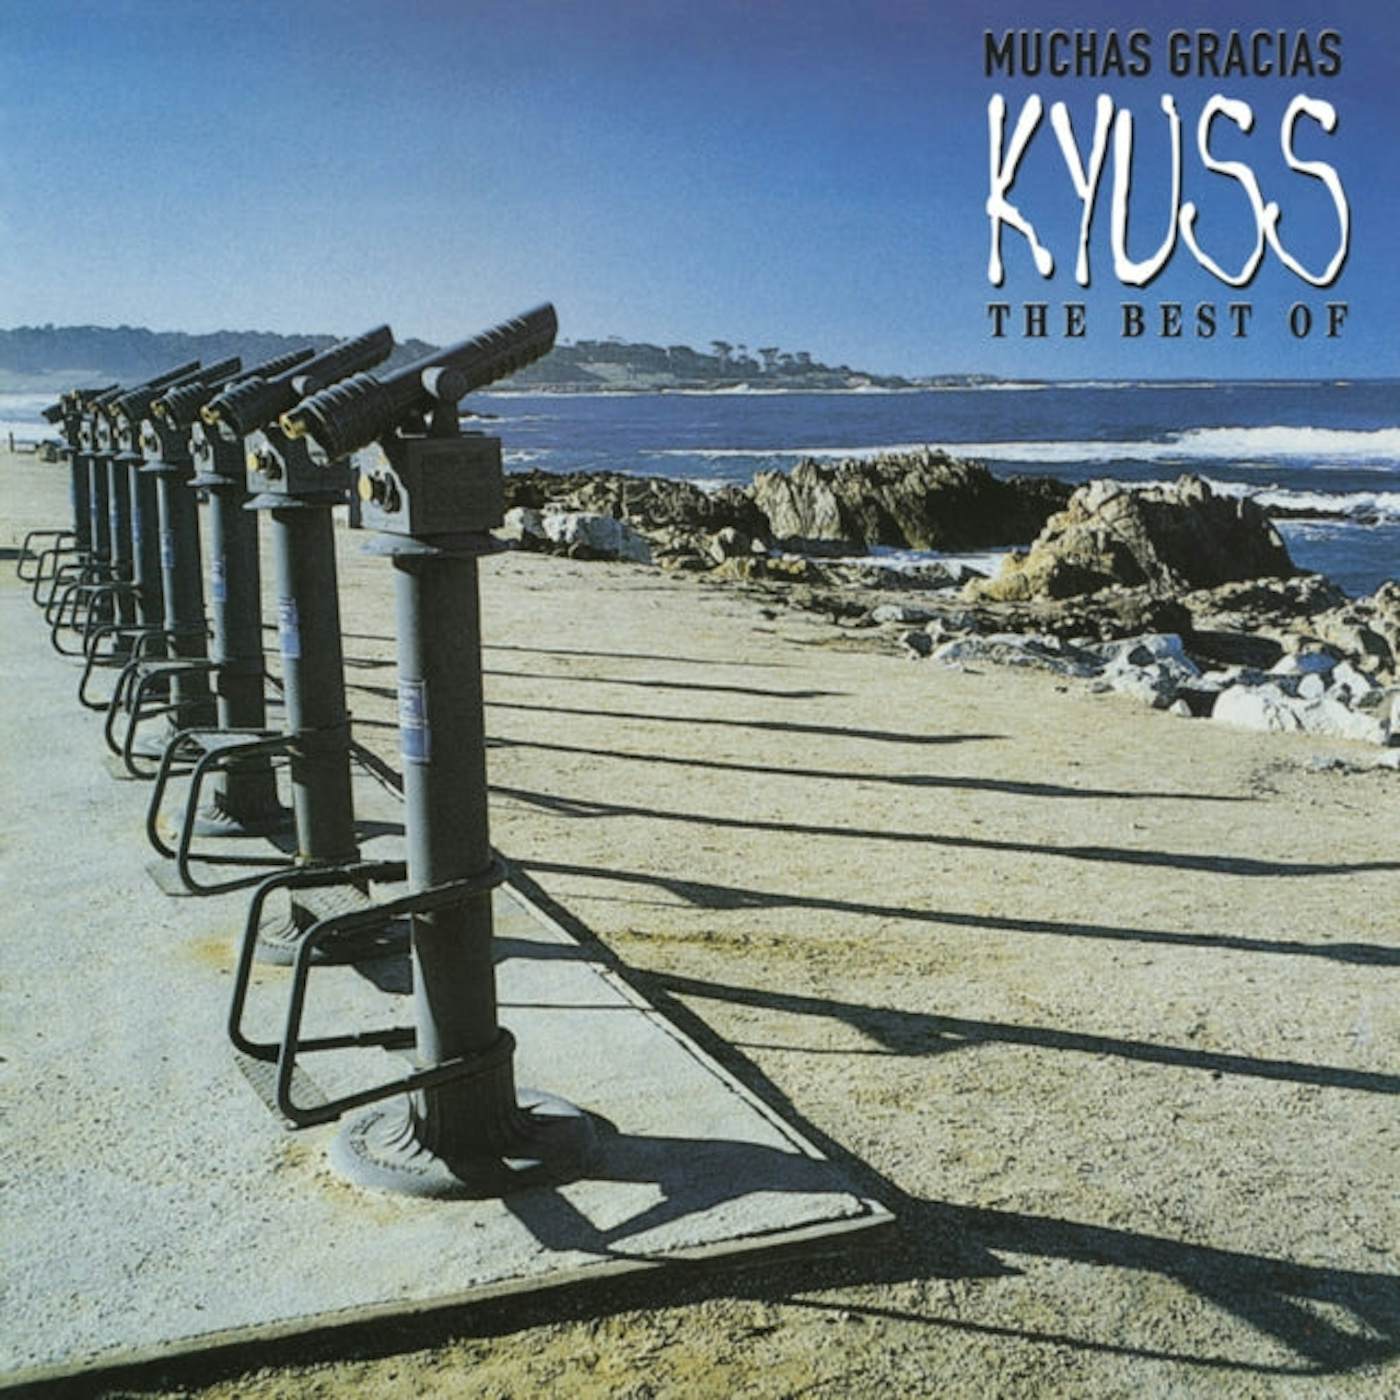 Kyuss LP Vinyl Record - Muchas Gracias: The Best Of Kyuss (Run Out Groove)